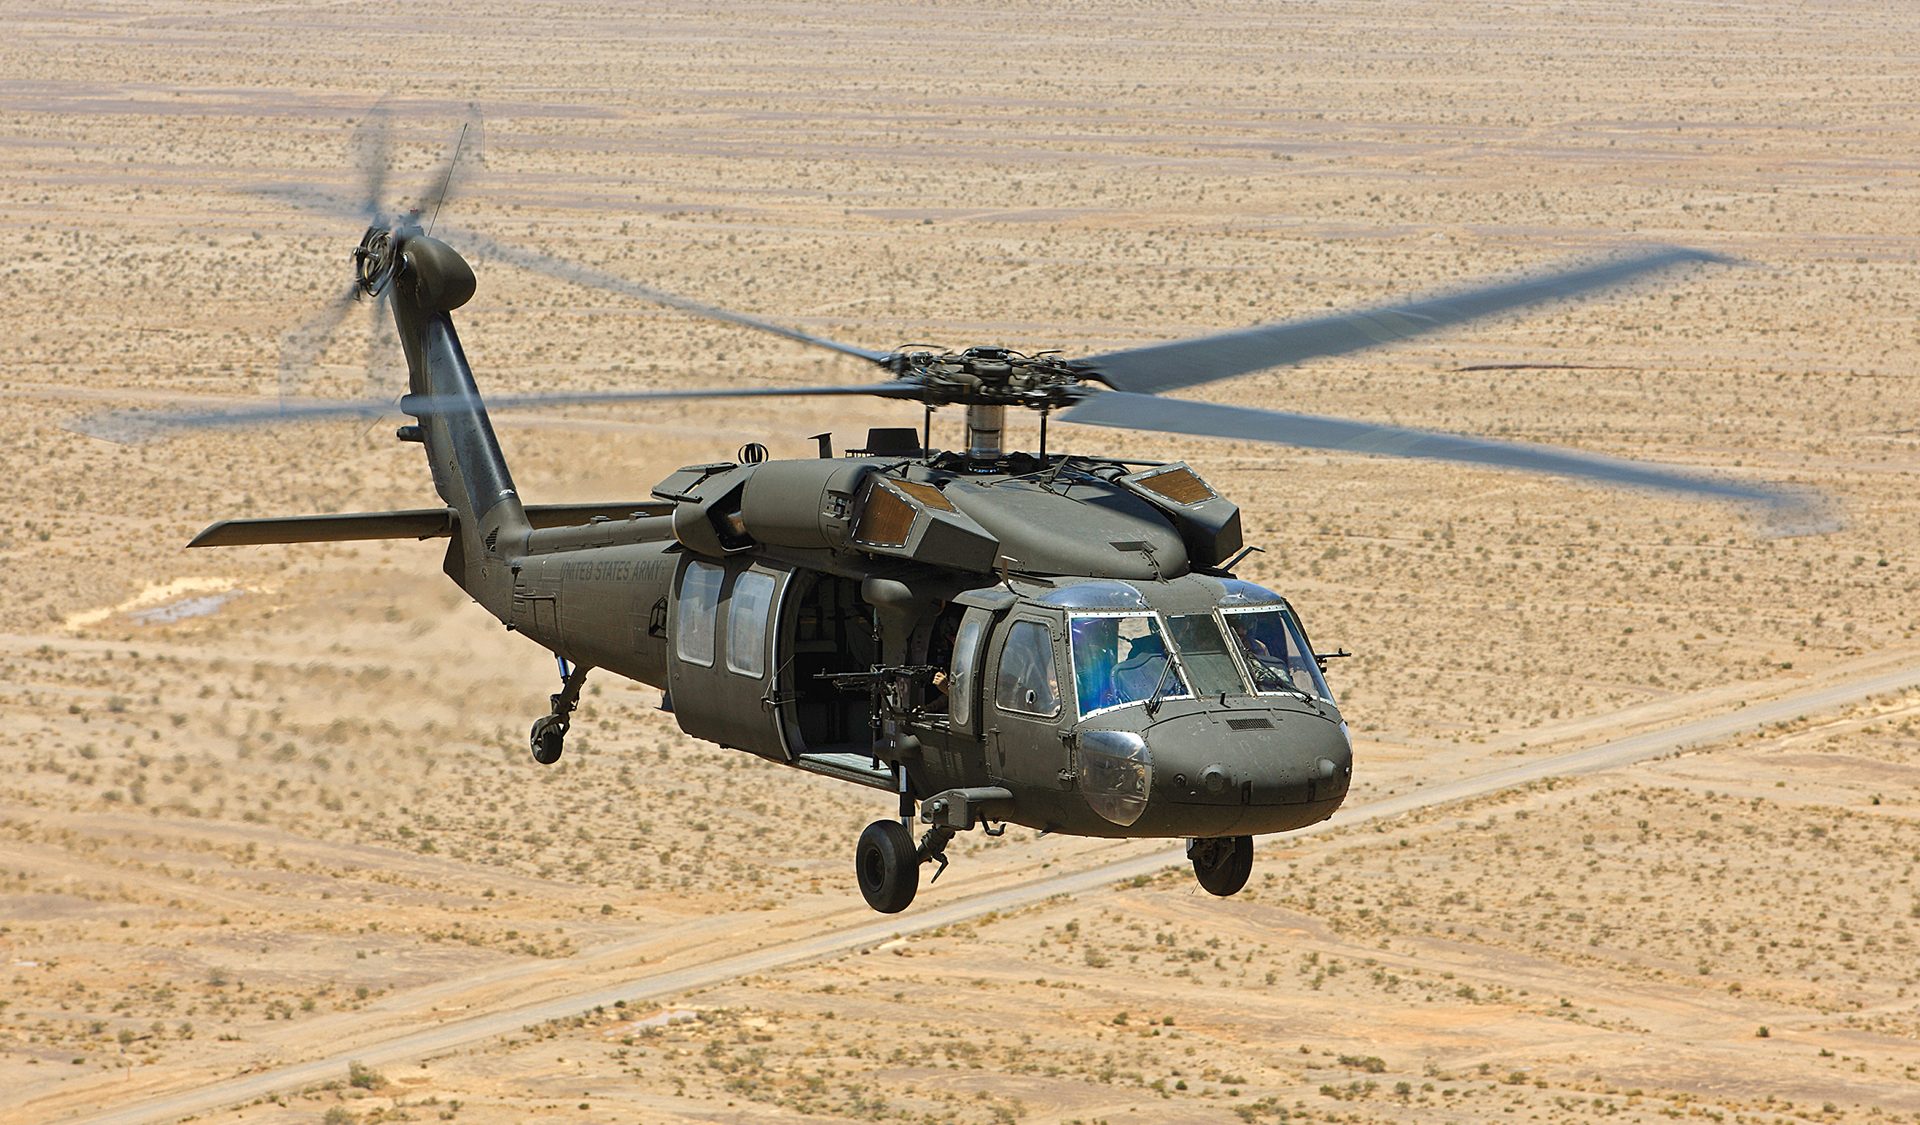 Sikorsky Black Hawk 40th Anniversary